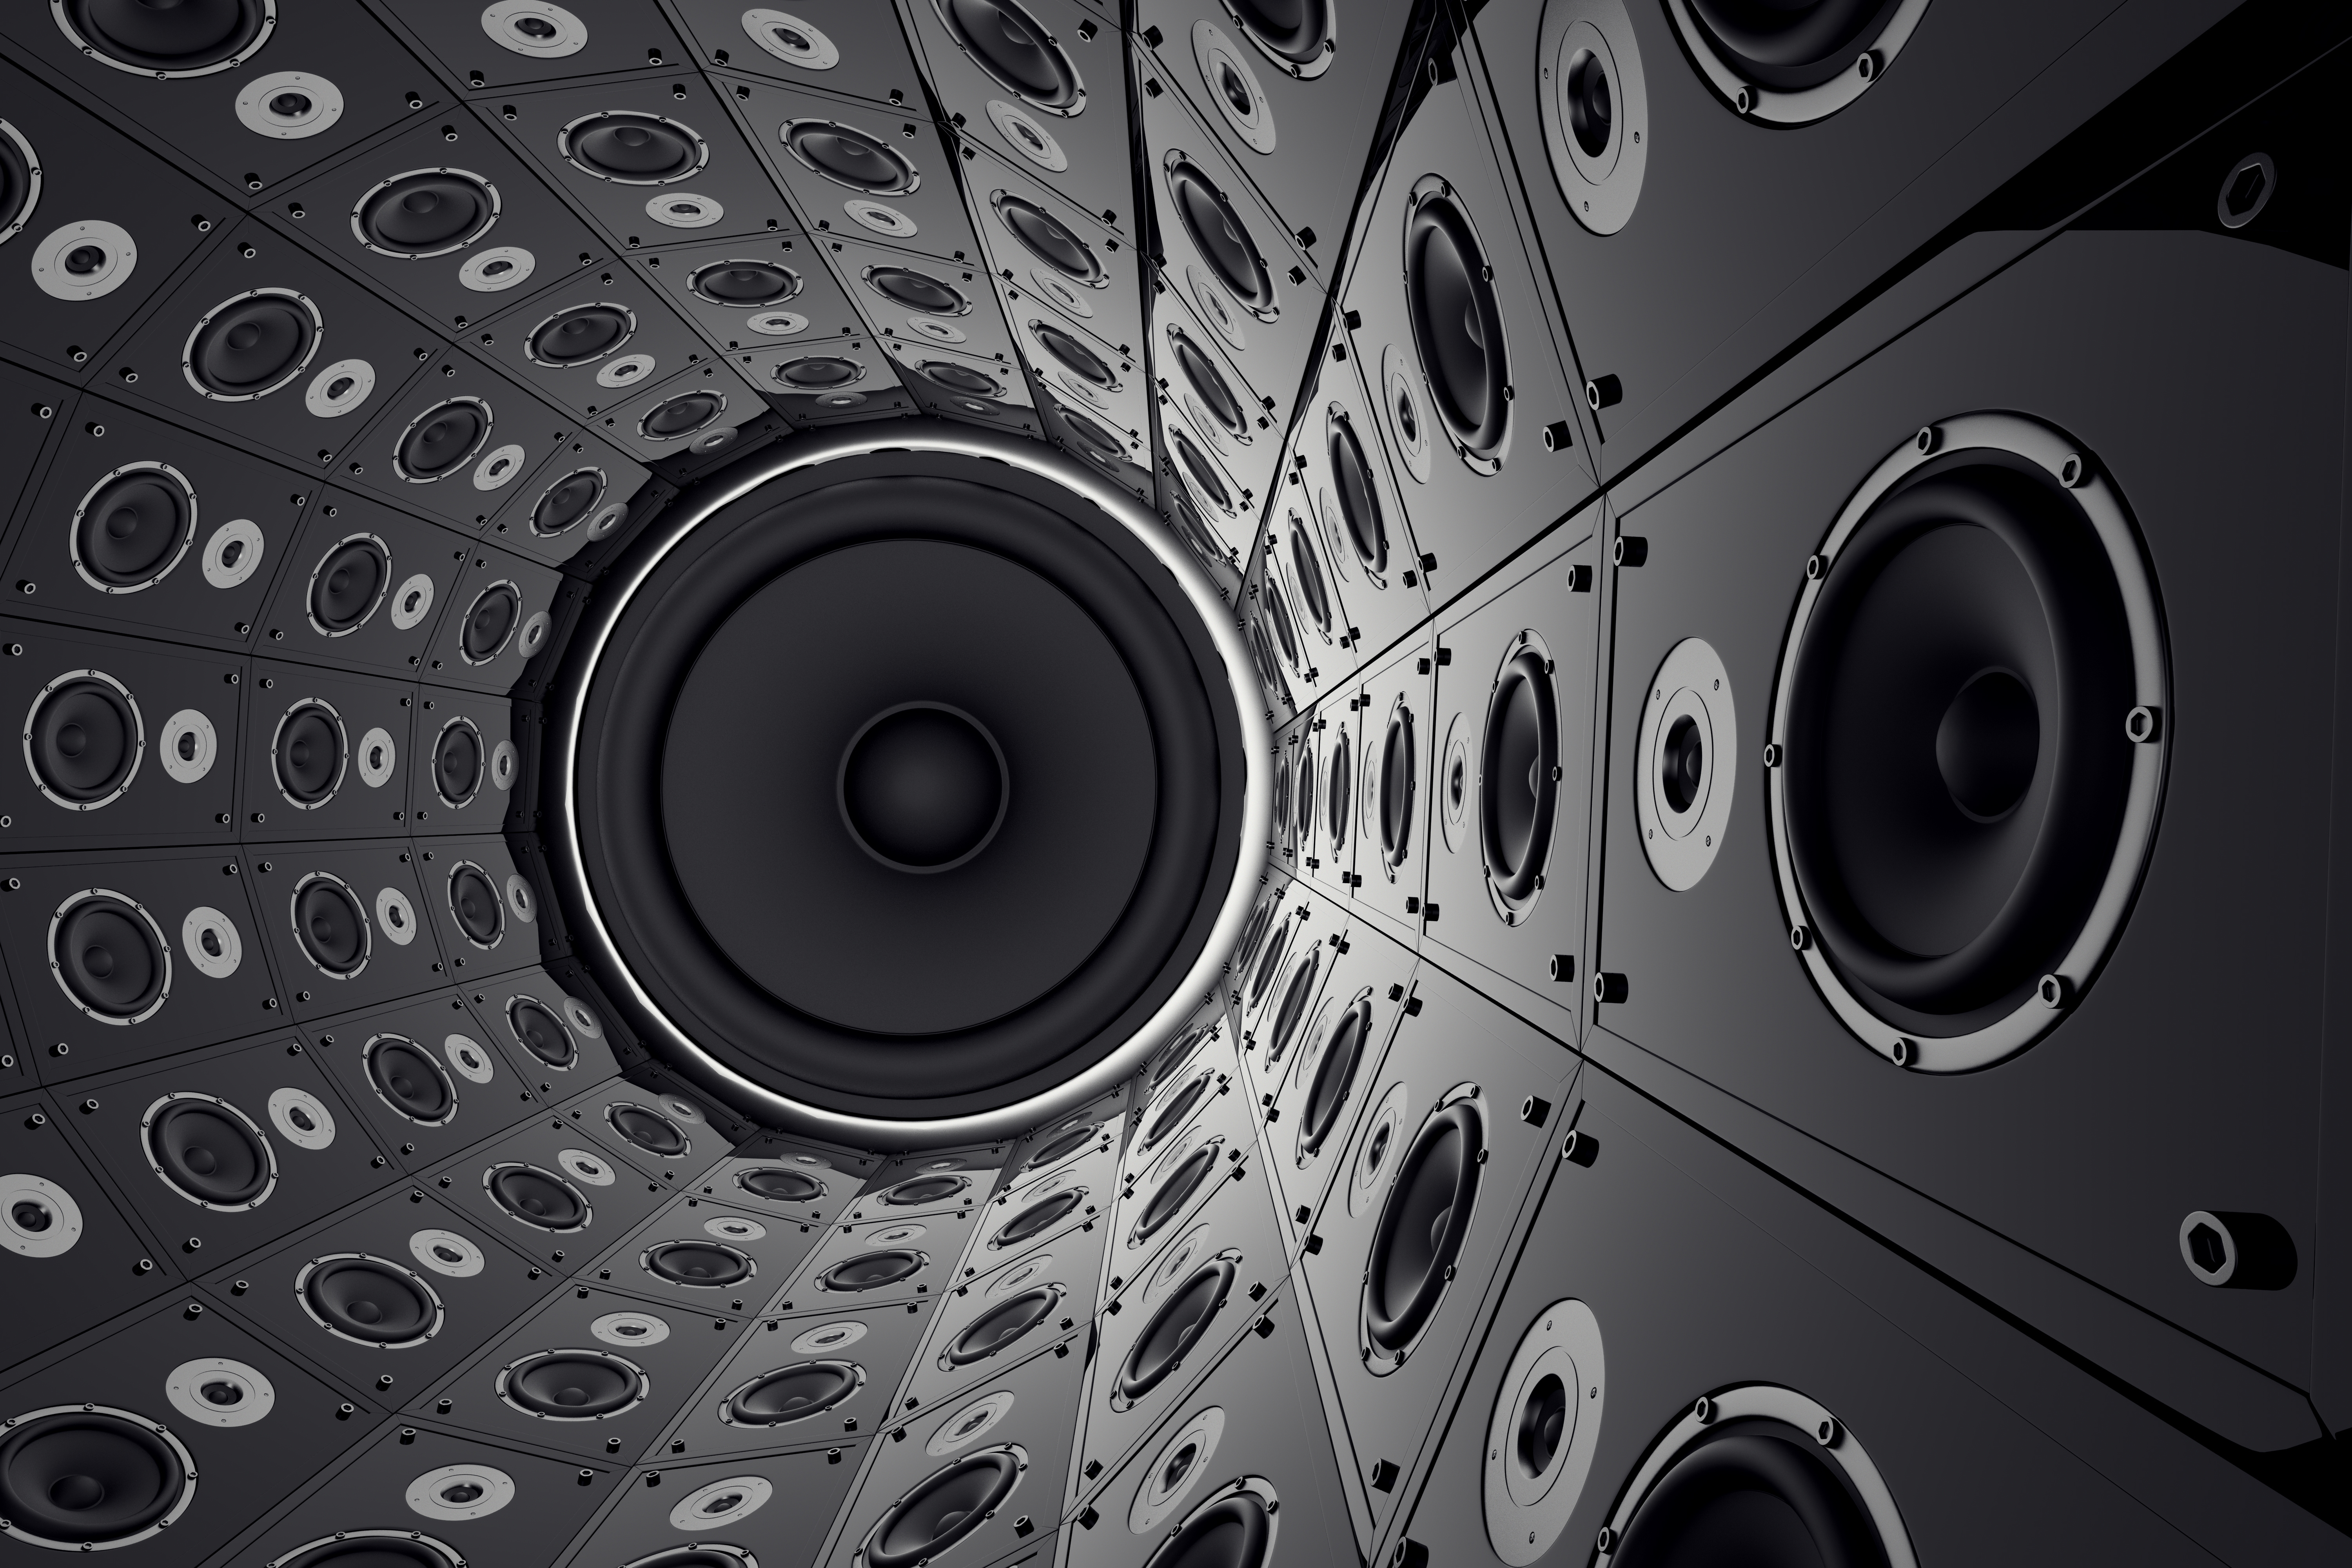 Le son surround offre une expérience auditive. © Dabarti, Adobe Stock